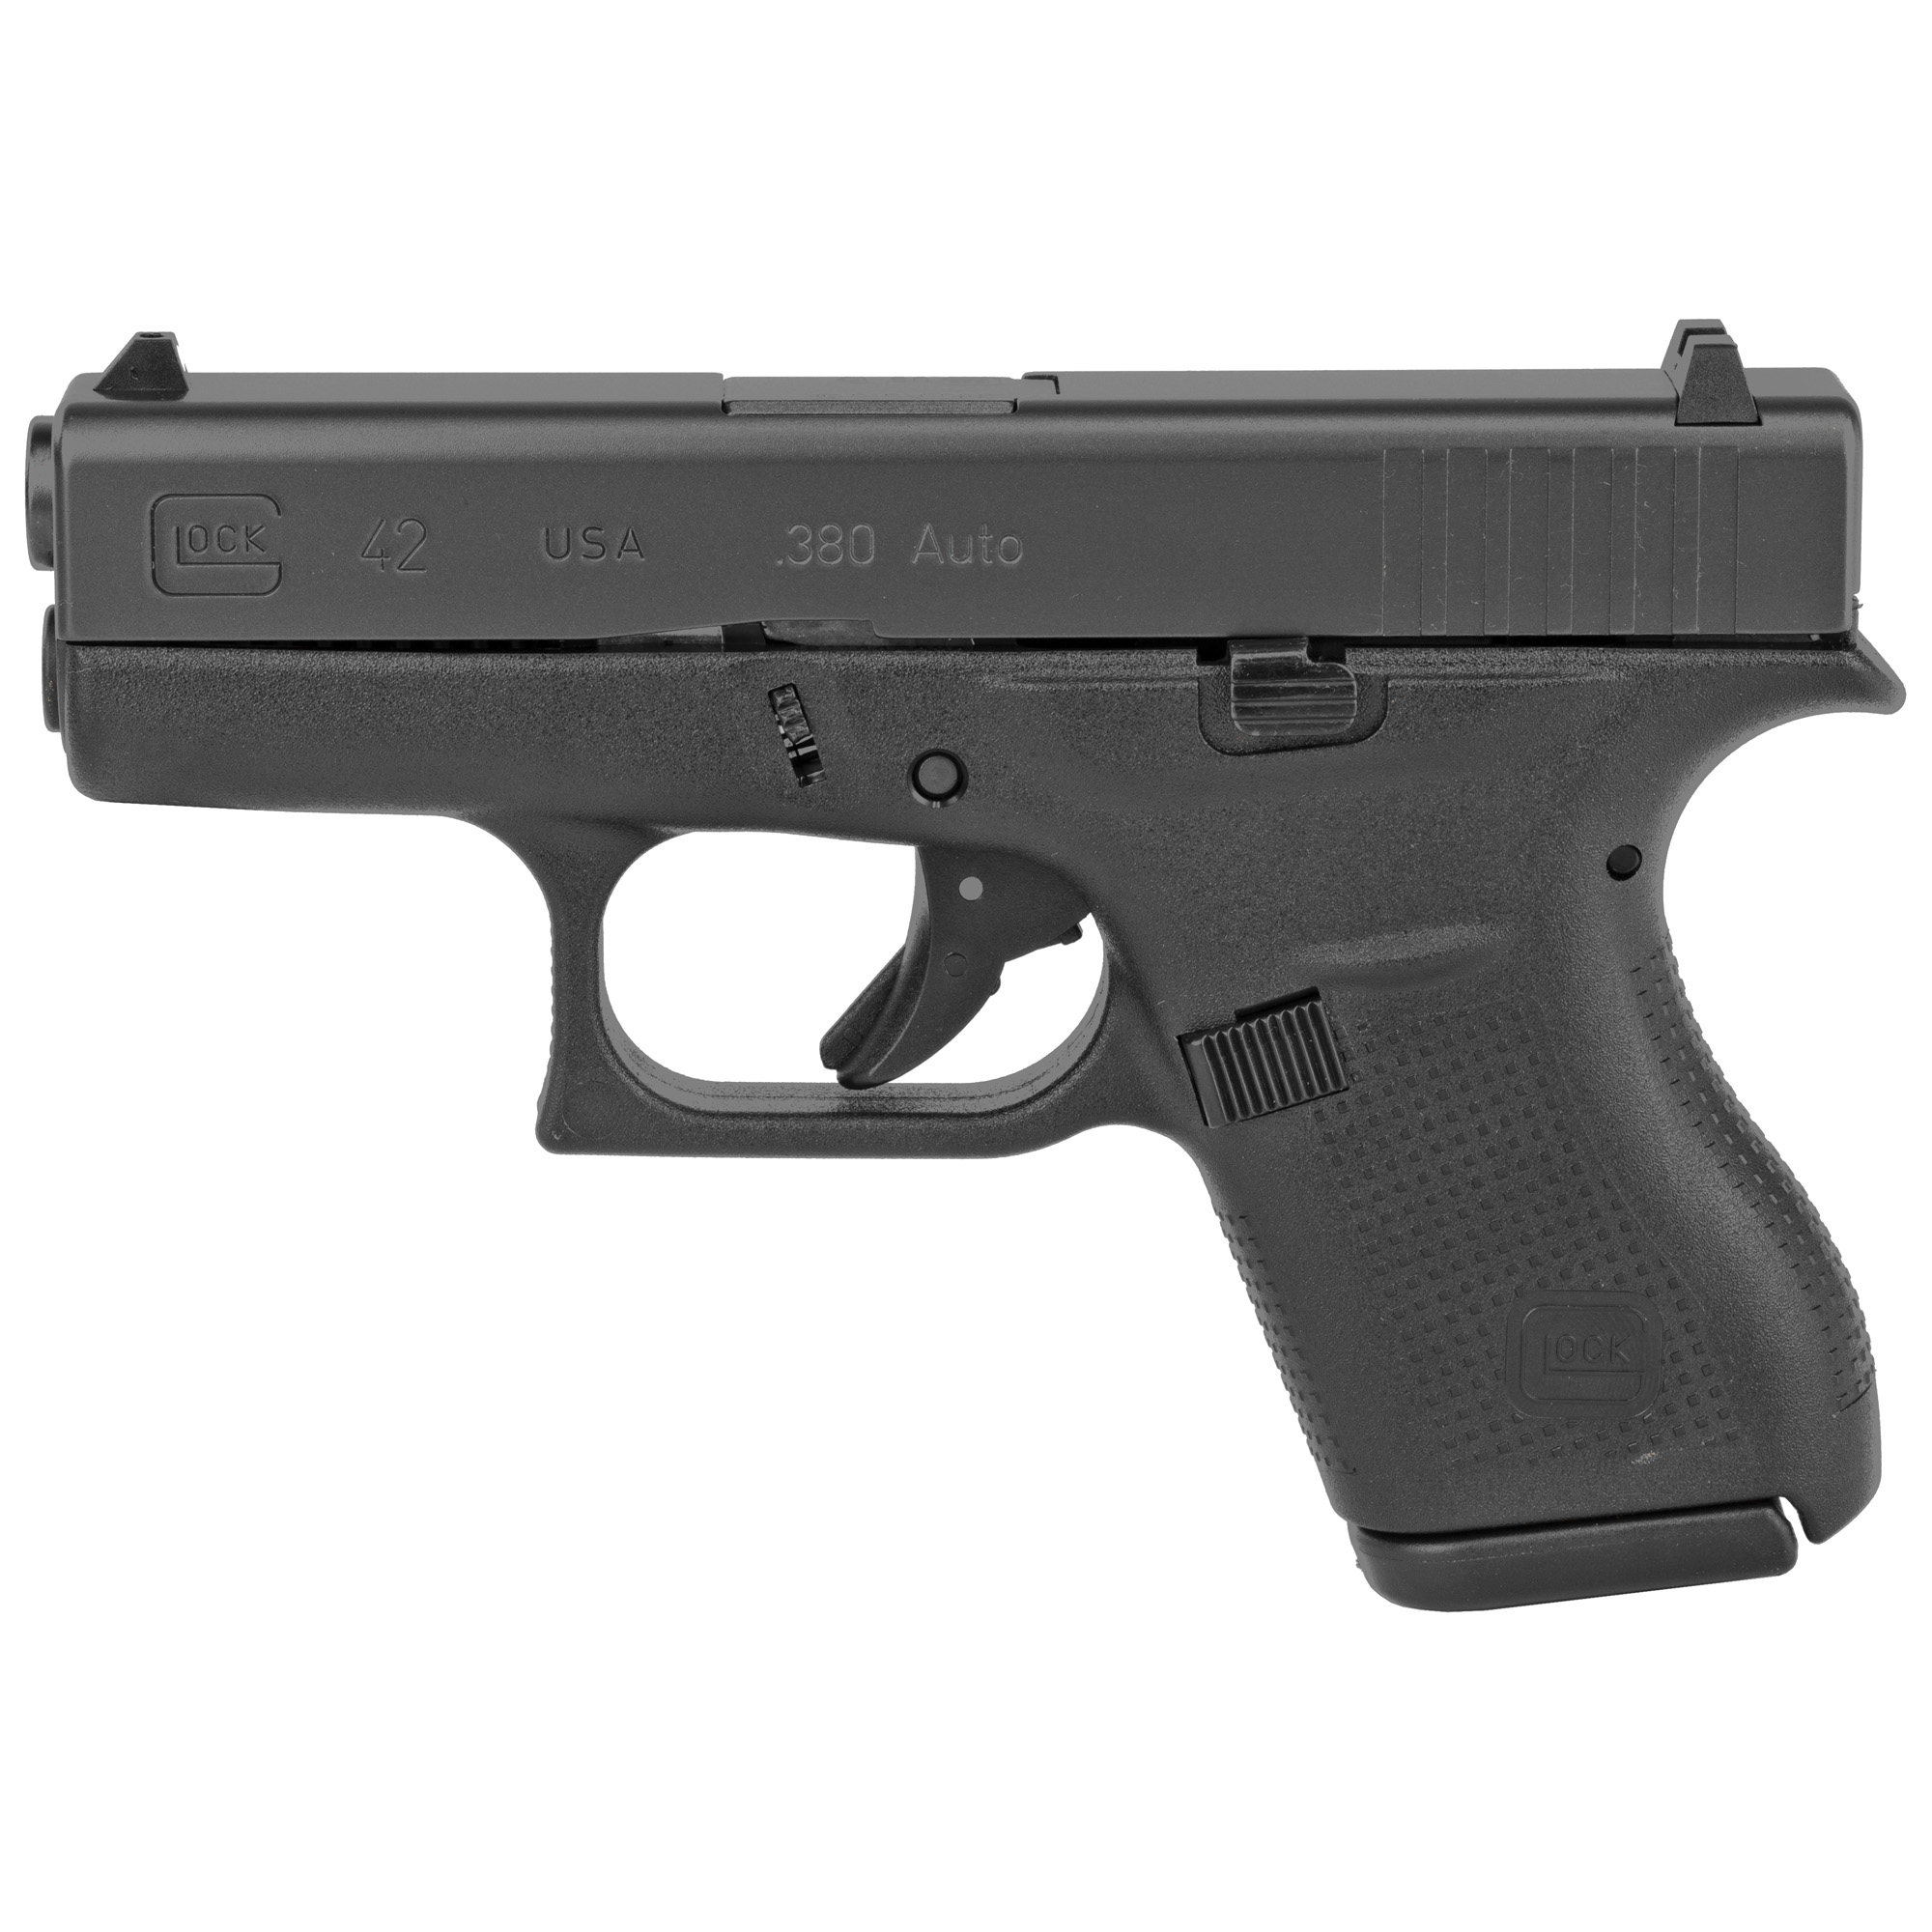 GLOCK 42 Semi-Automatic Pistol .380 ACP 3.25" Barrel 6 Rounds Polymer Frame Black (UI4250201) 764503910616